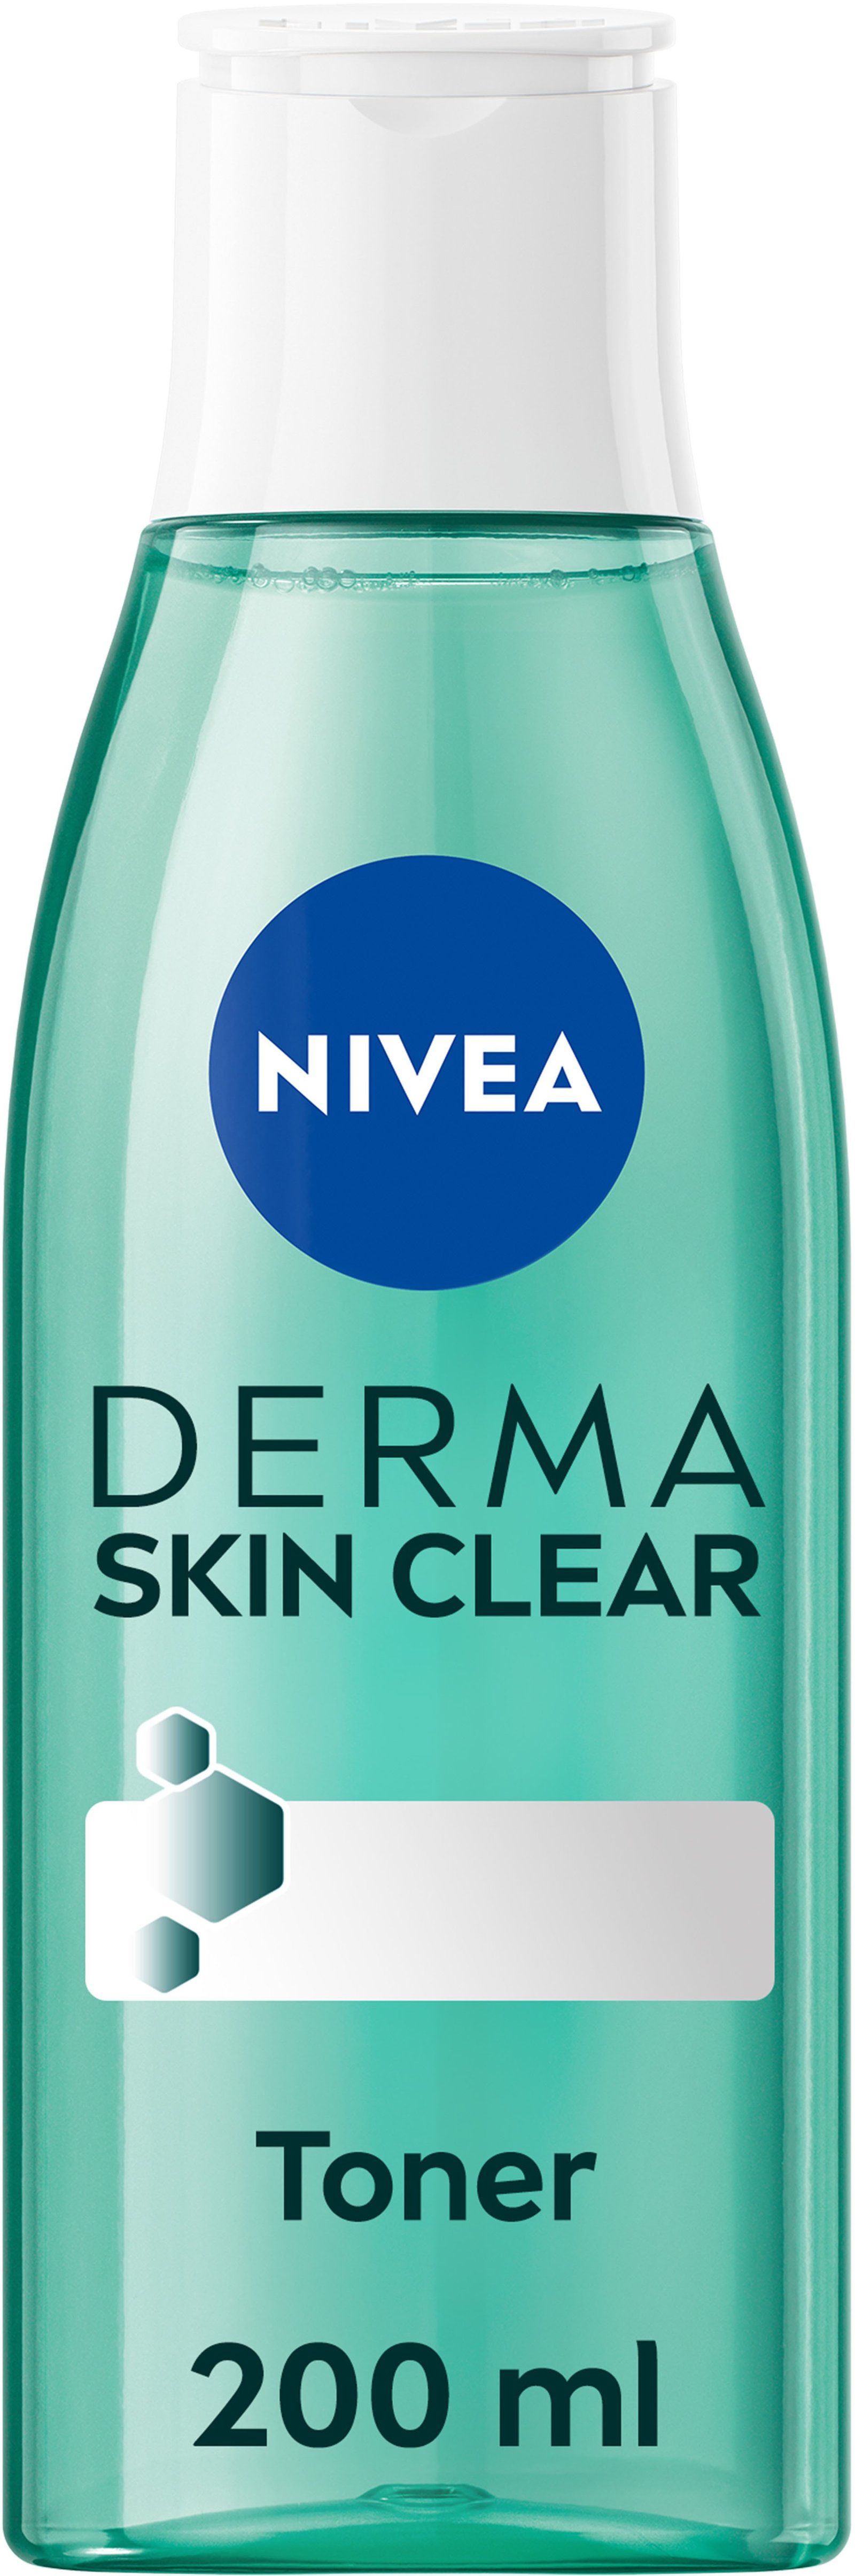 NIVEA Derma Skin Clear Toner 200ml